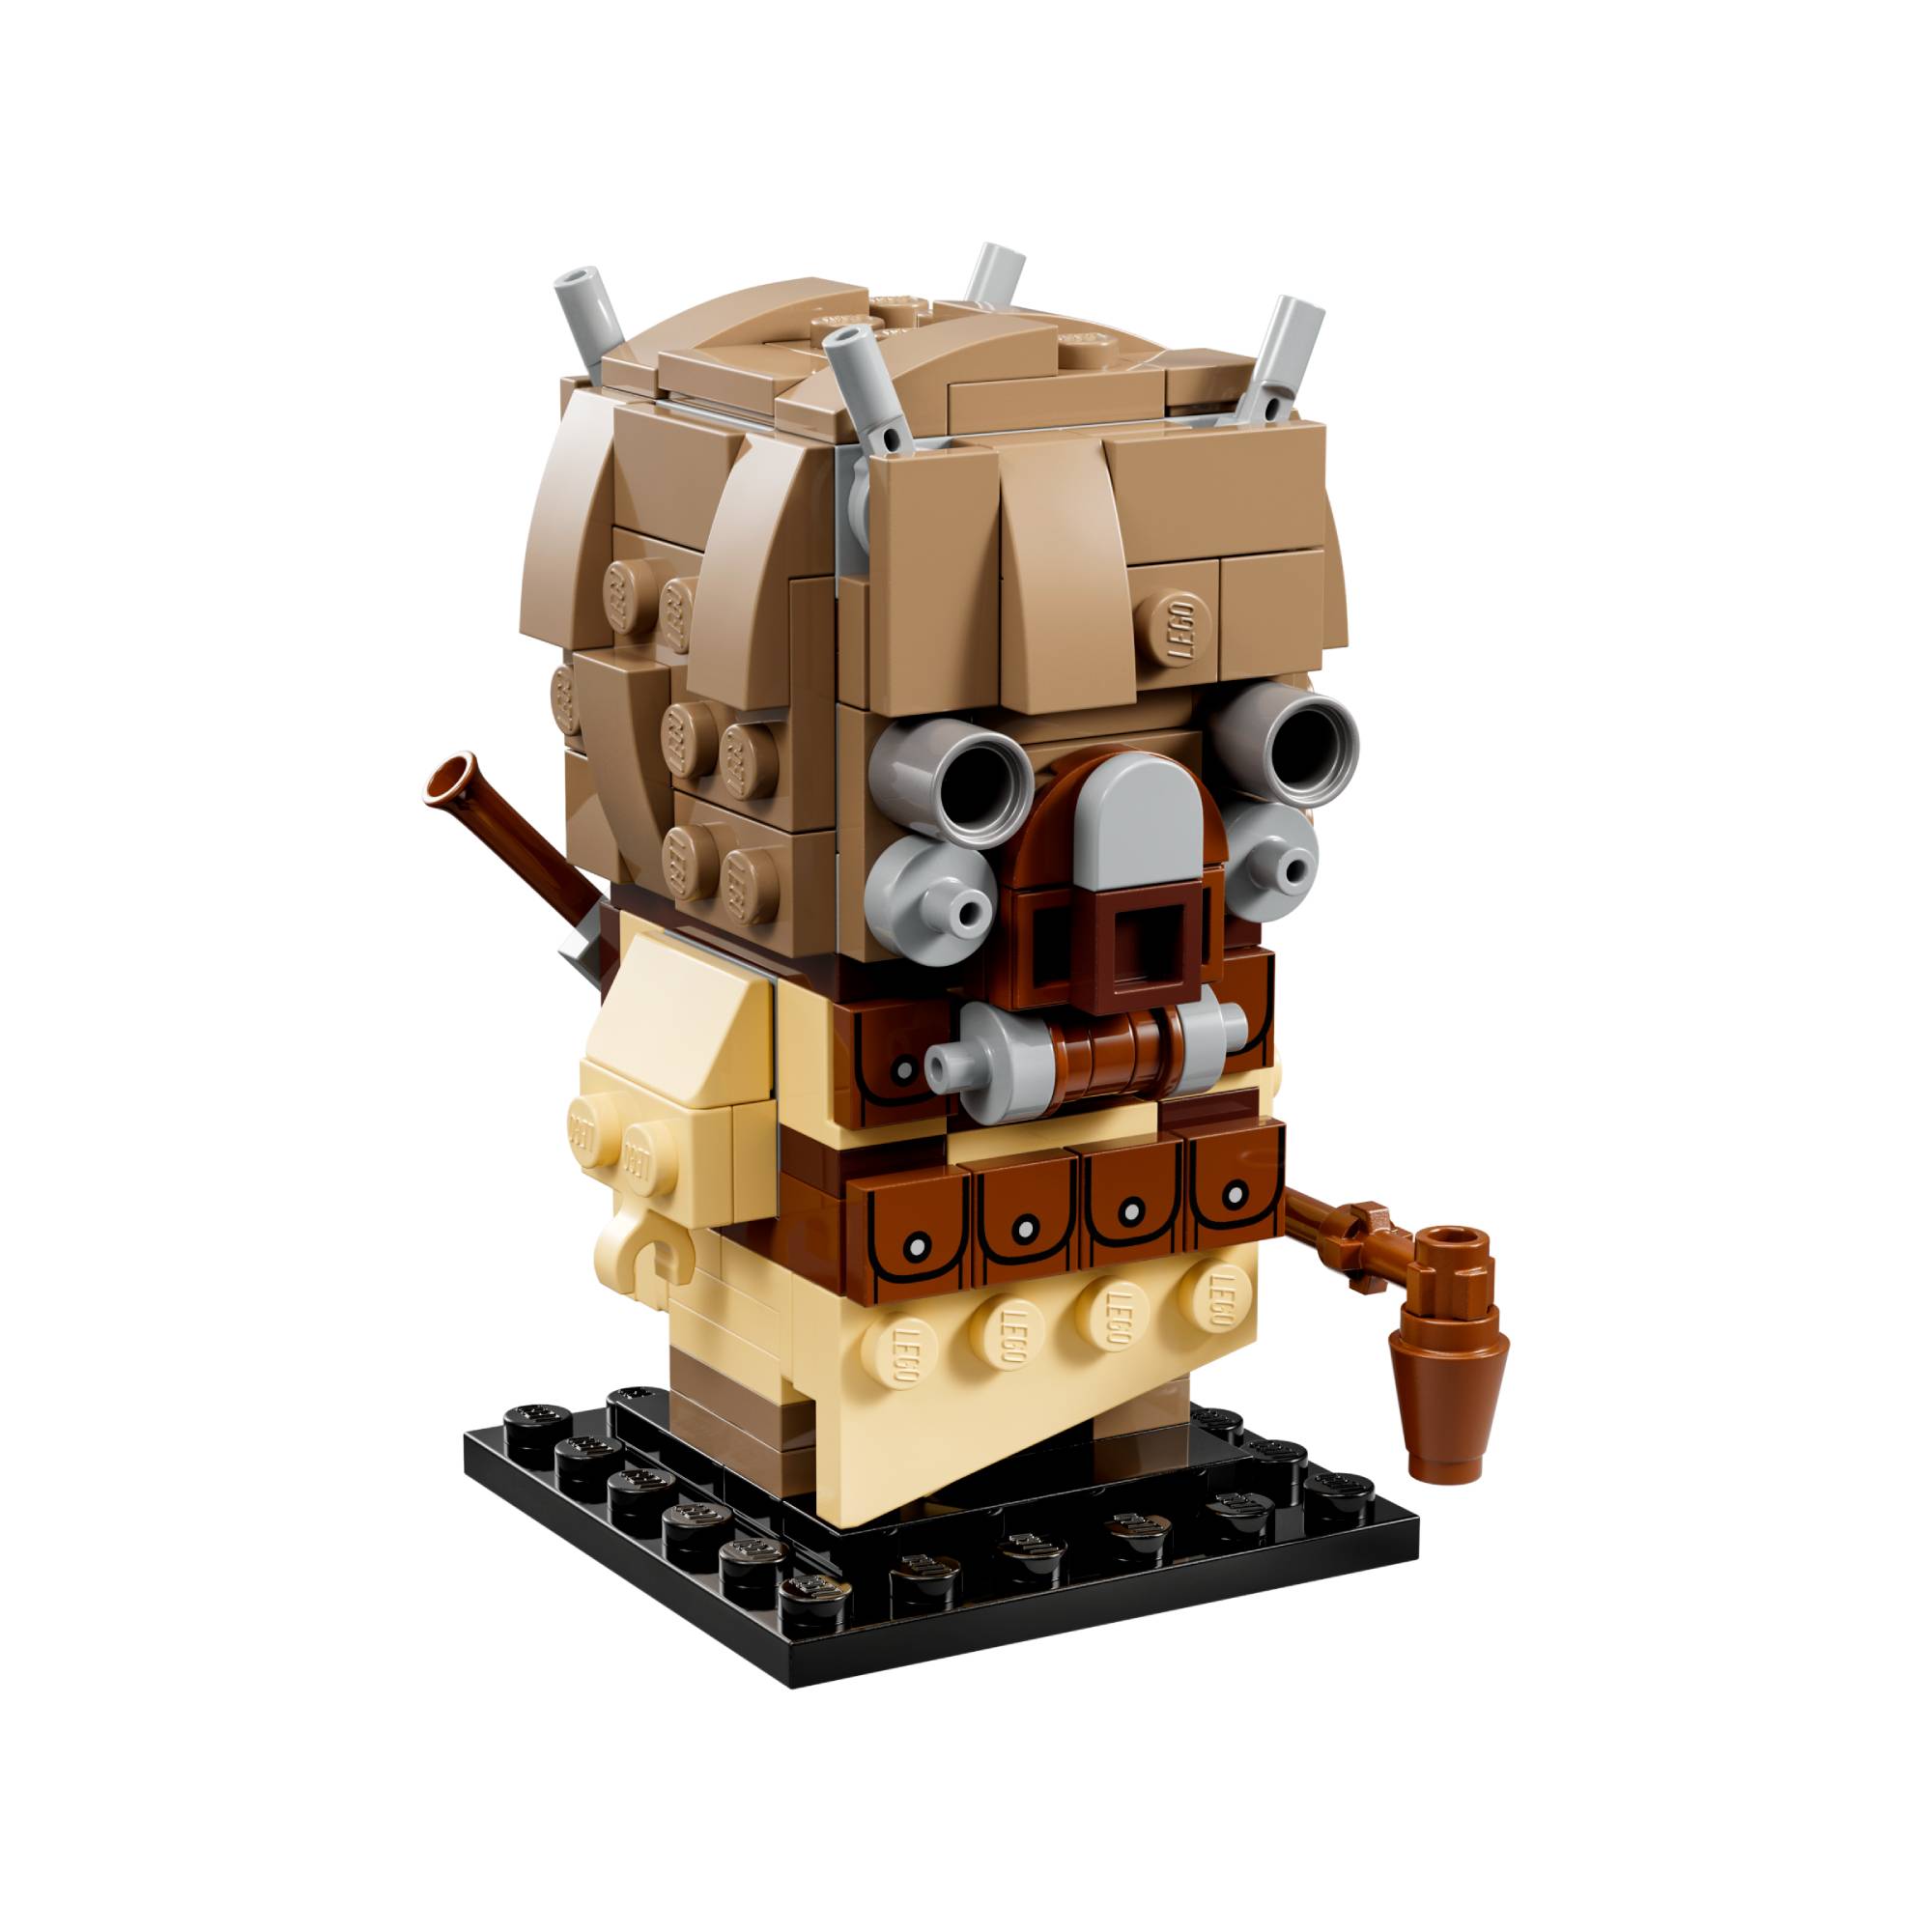 Lego Star Wars: The Skywalker Saga - Numa galáxia distante feita peça a  peça